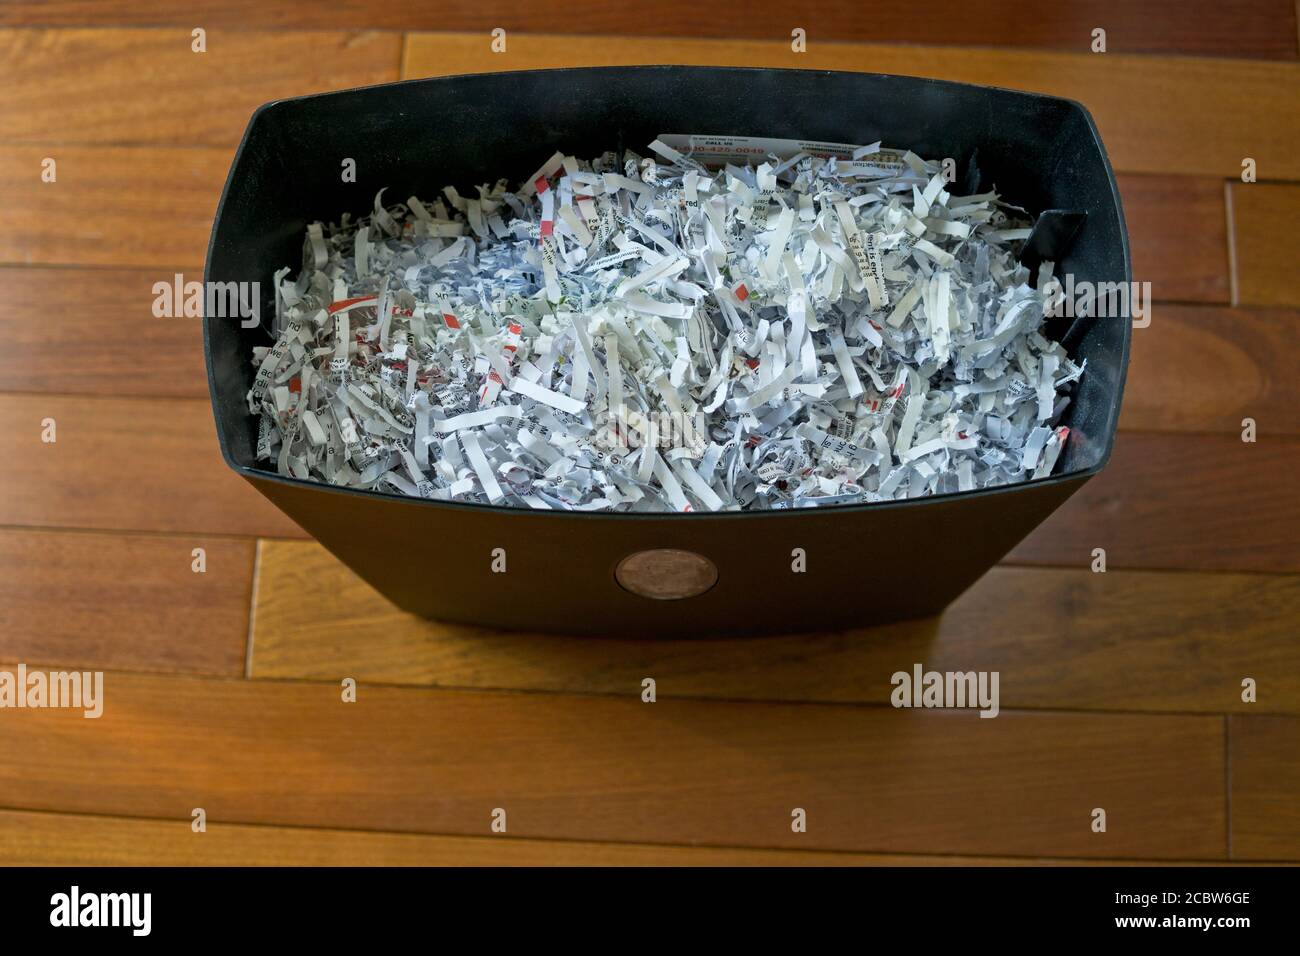 A paper shredder full of shredded paper in a home office. Stock Photo